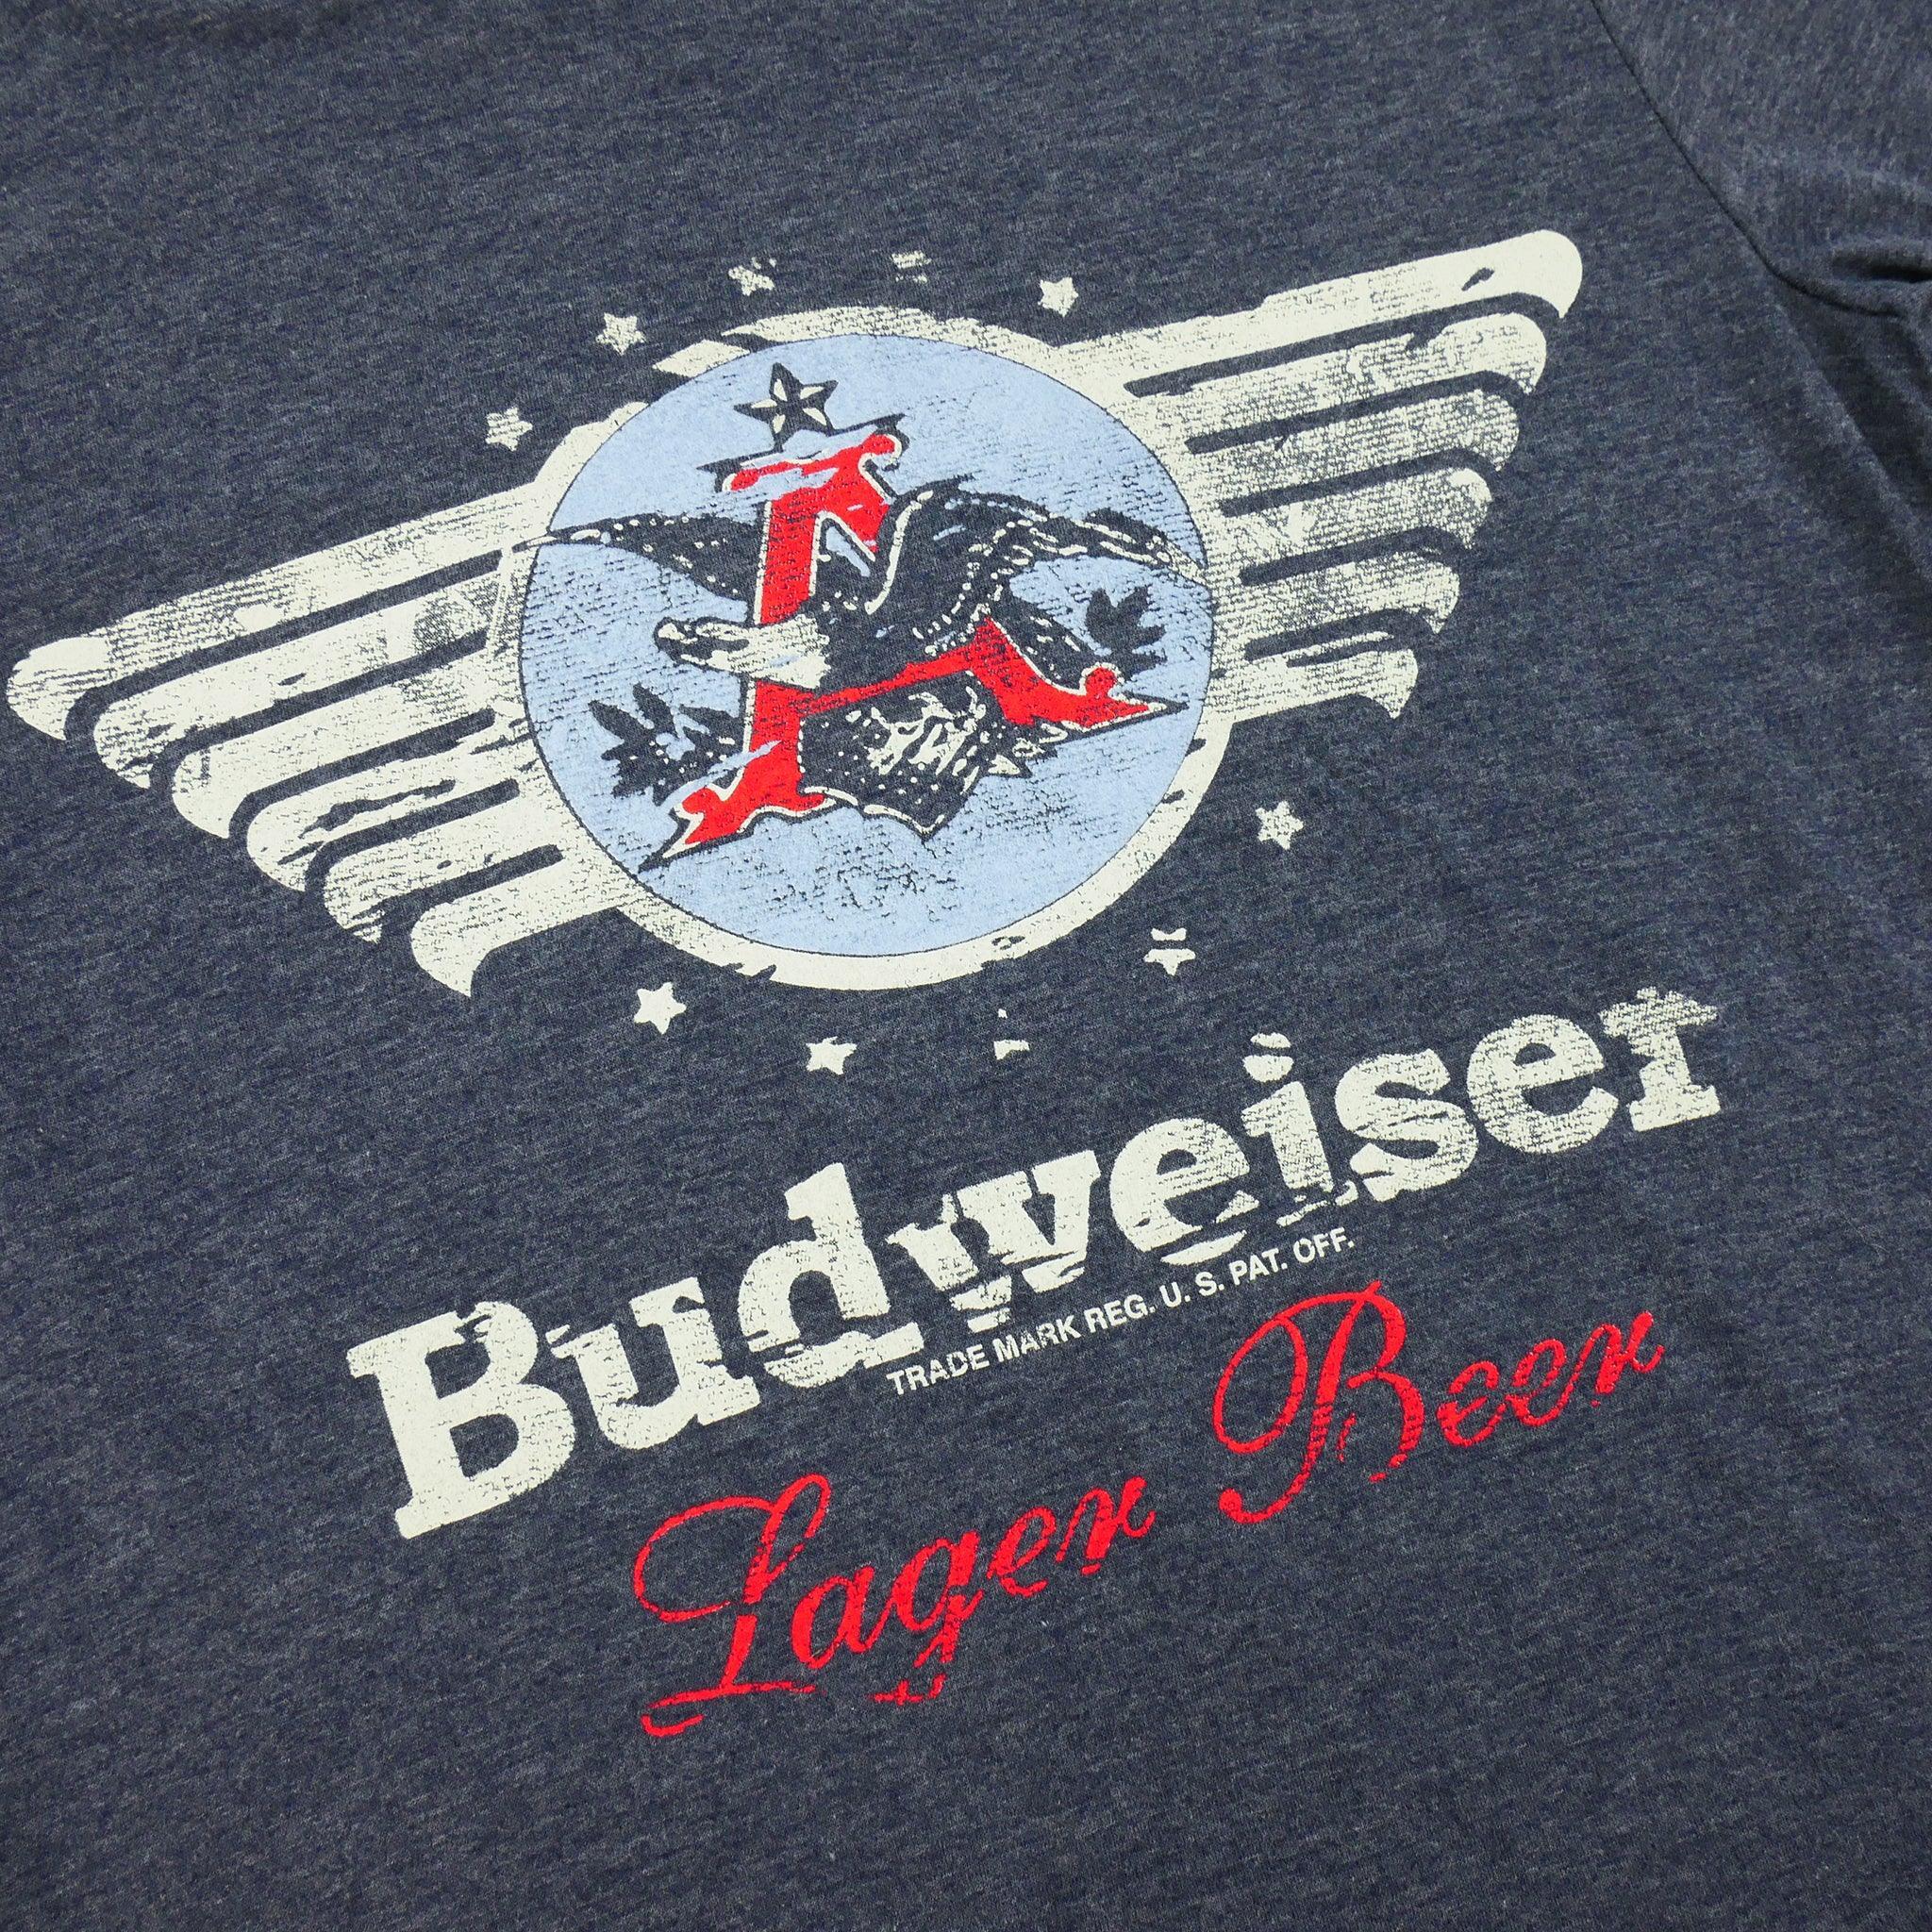 Budweiser Vintage Wing T-Shirt